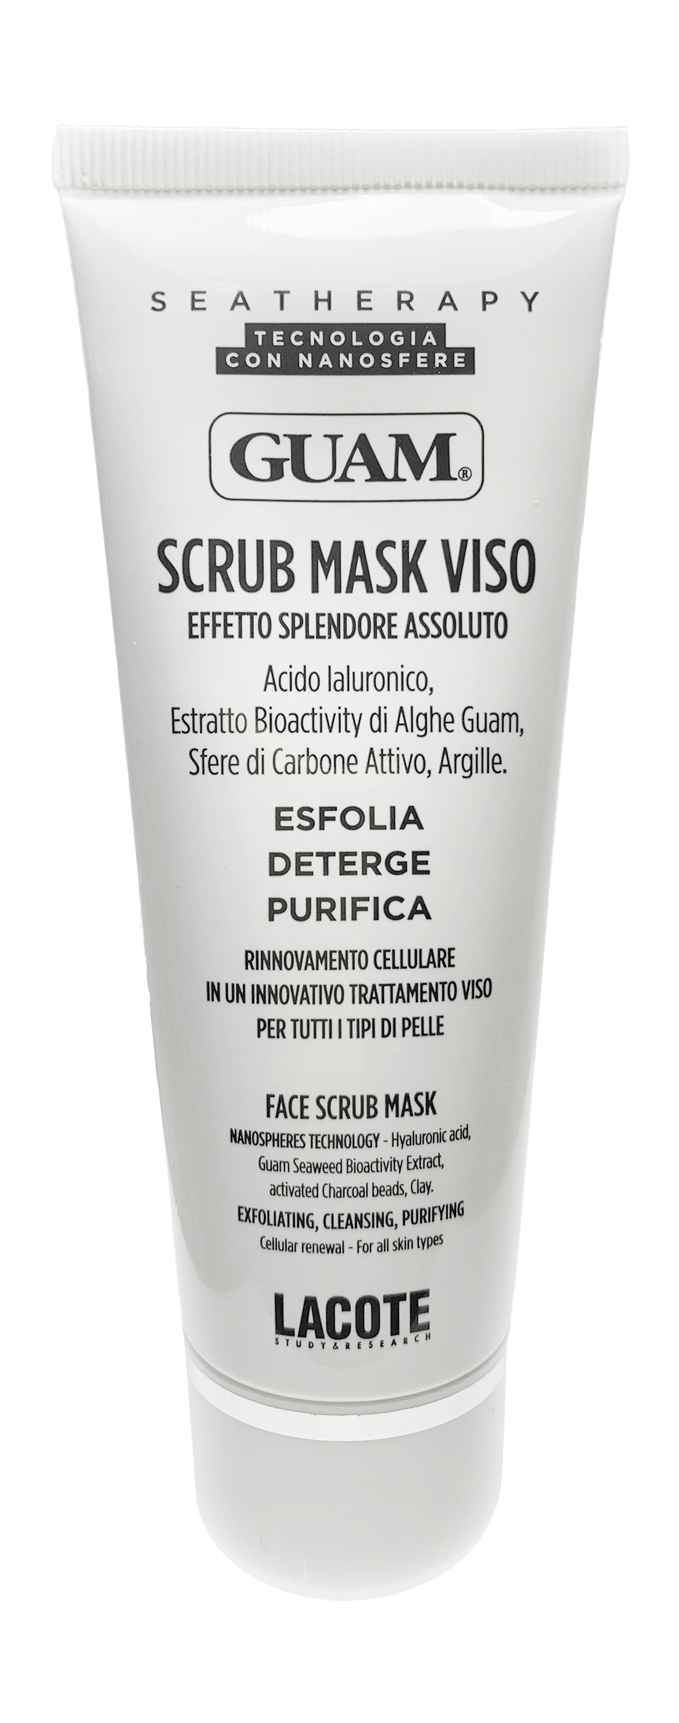 Скраб для лица GUAM Seatherapy Scrub Mask Viso Tubo nera pantelleria крем для лица успокаивающий после загара crema viso doposole